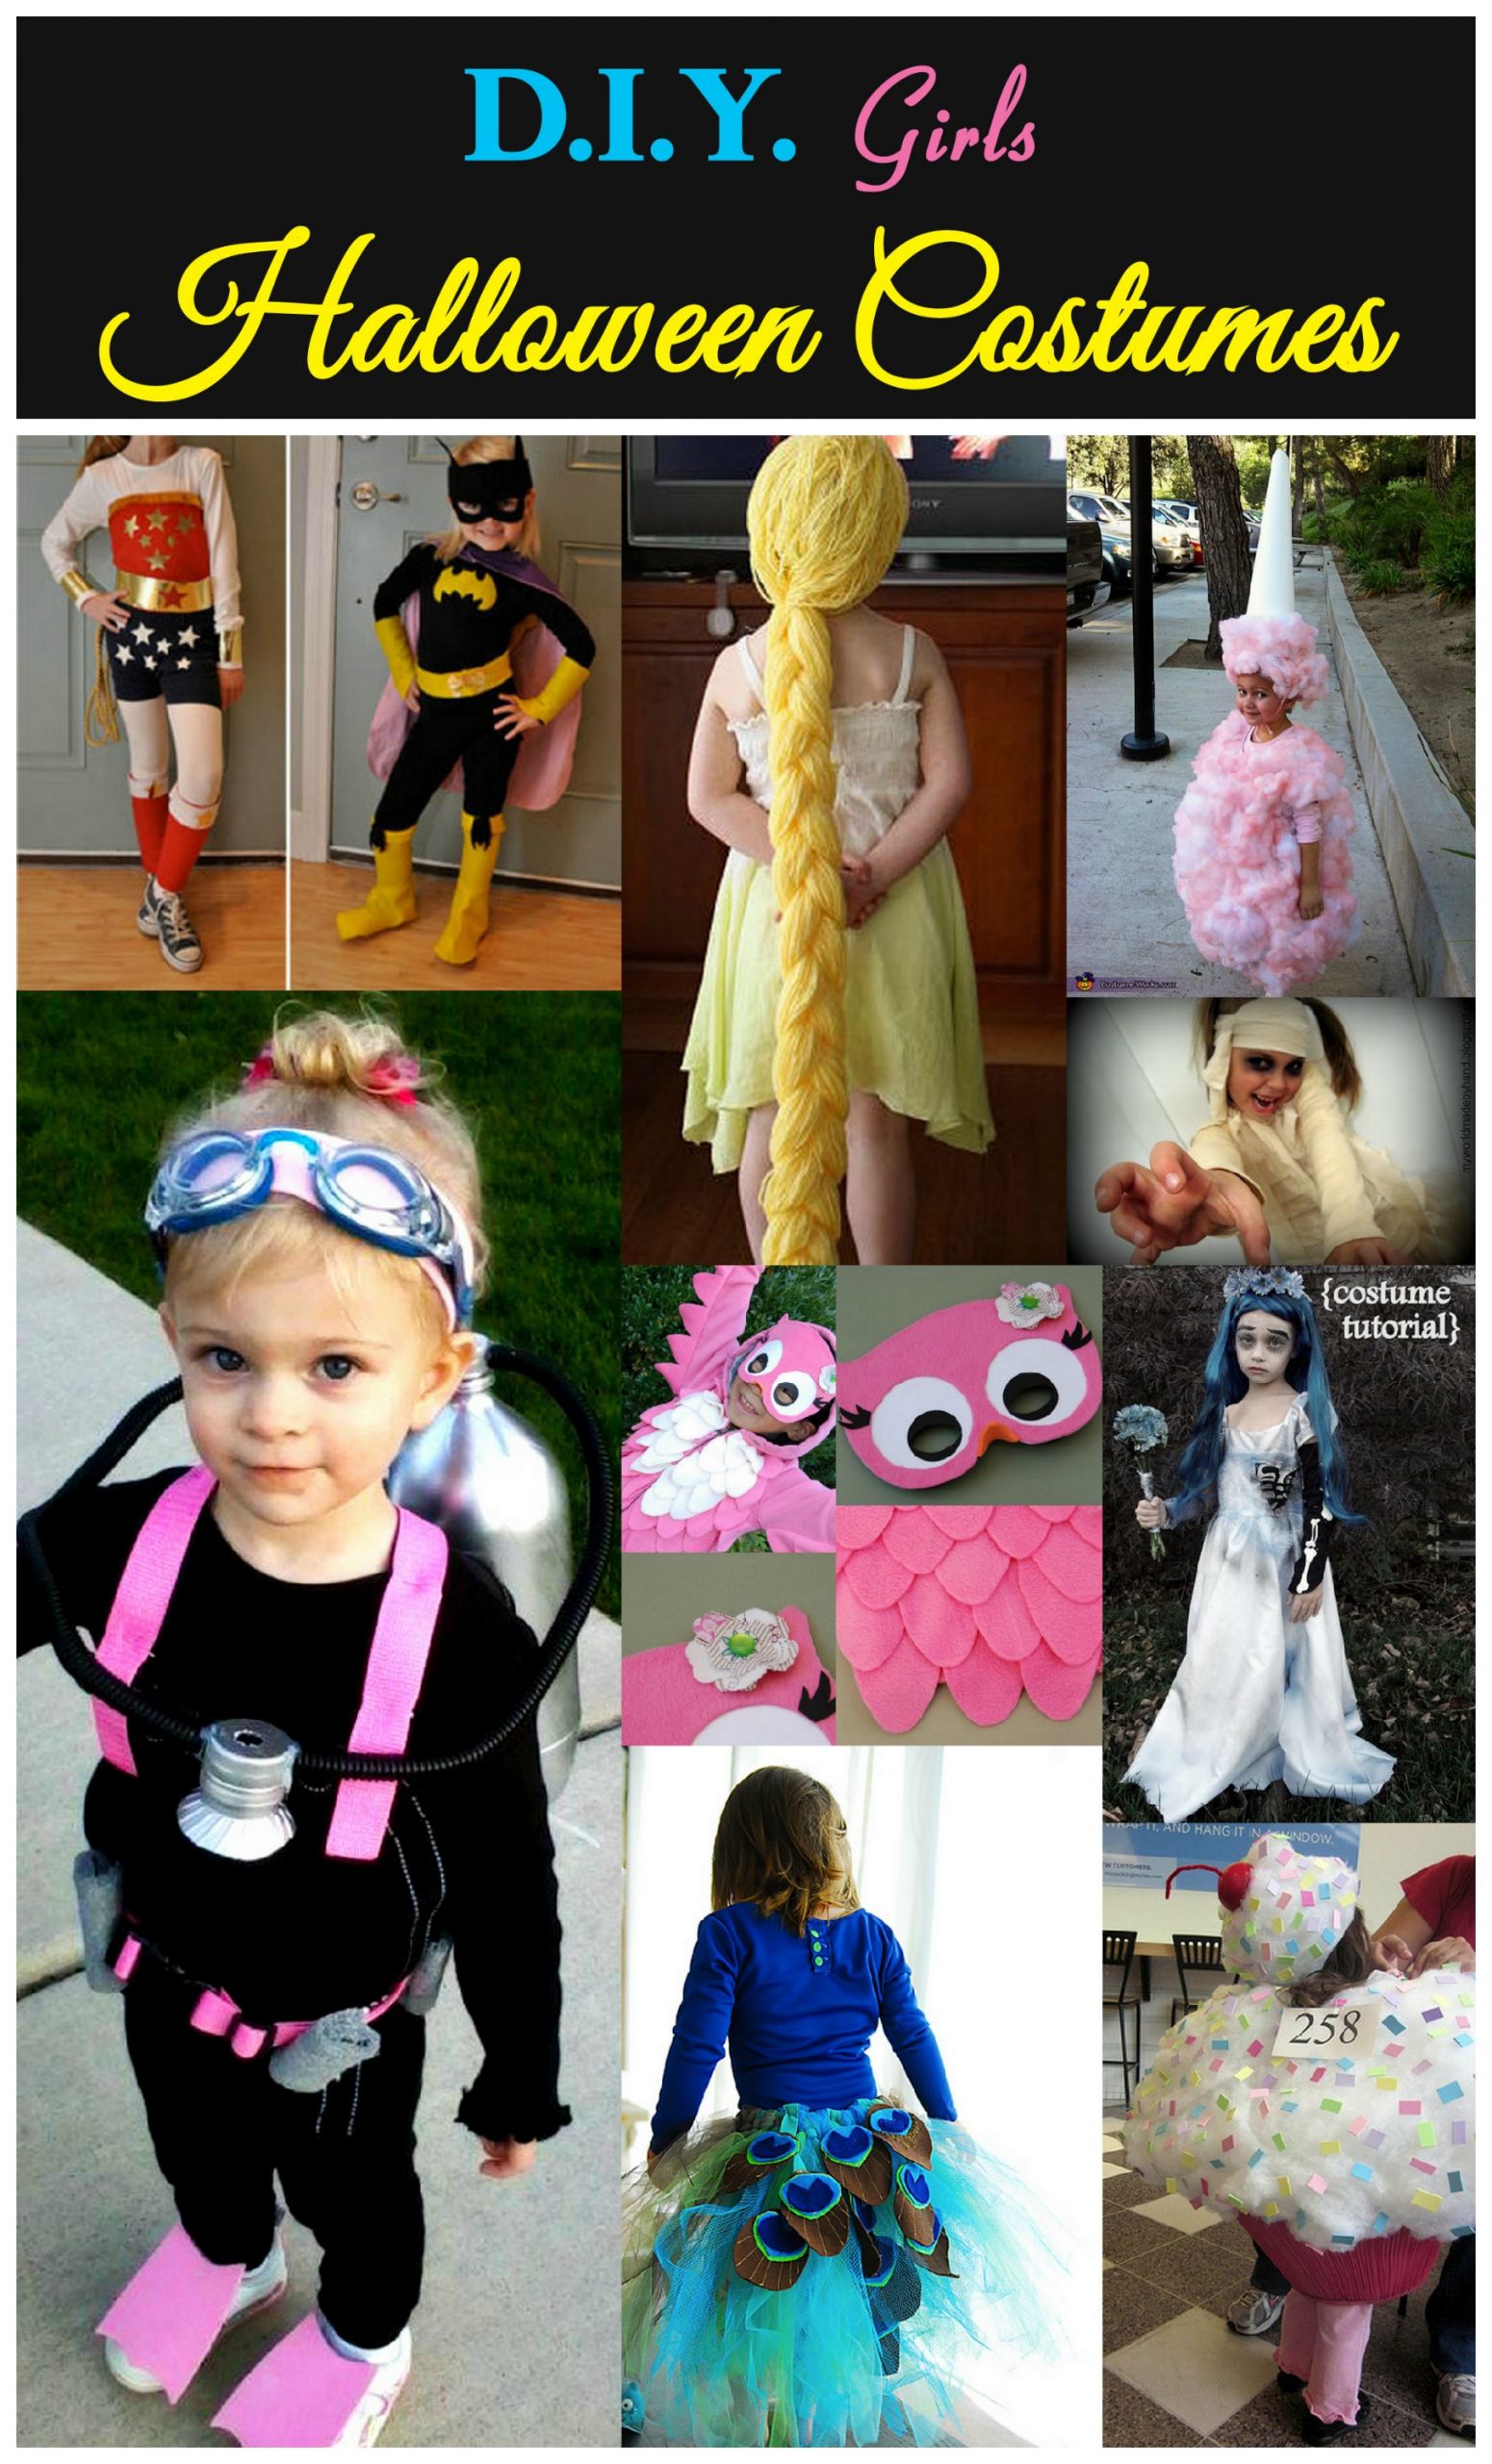 DIY Halloween Costumes For Girls
 D I Y Girls Halloween Costumes